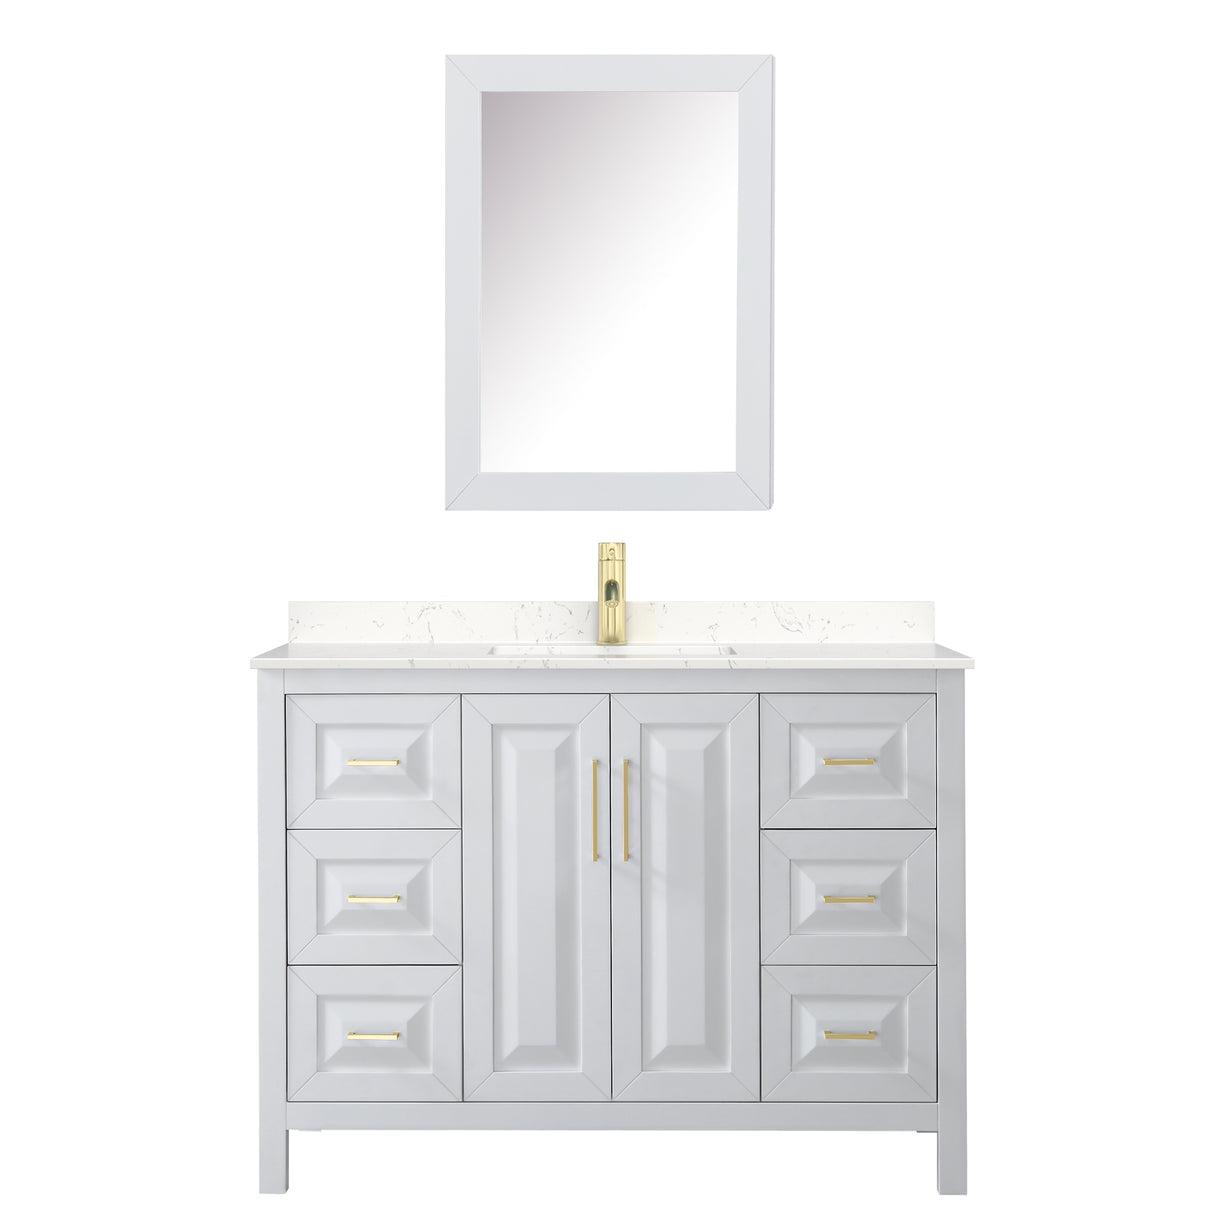 Daria 48 Inch Single Bathroom Vanity in White Carrara Cultured Marble Countertop Undermount Square Sink Medicine Cabinet Brushed Gold Trim